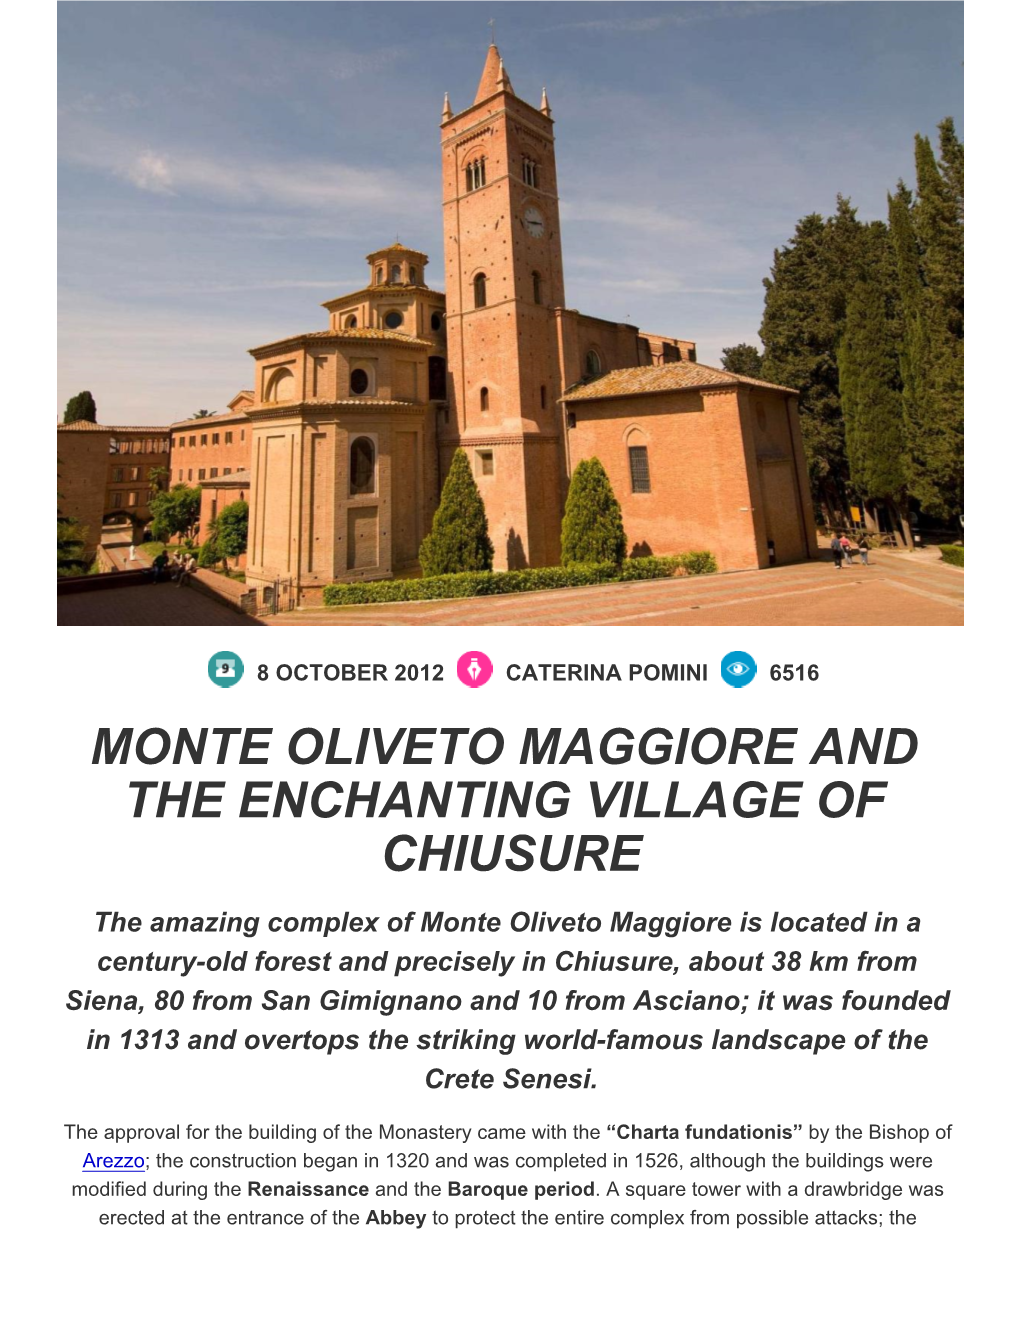 Monte Oliveto Maggiore and the Enchanting Village of Chiusure